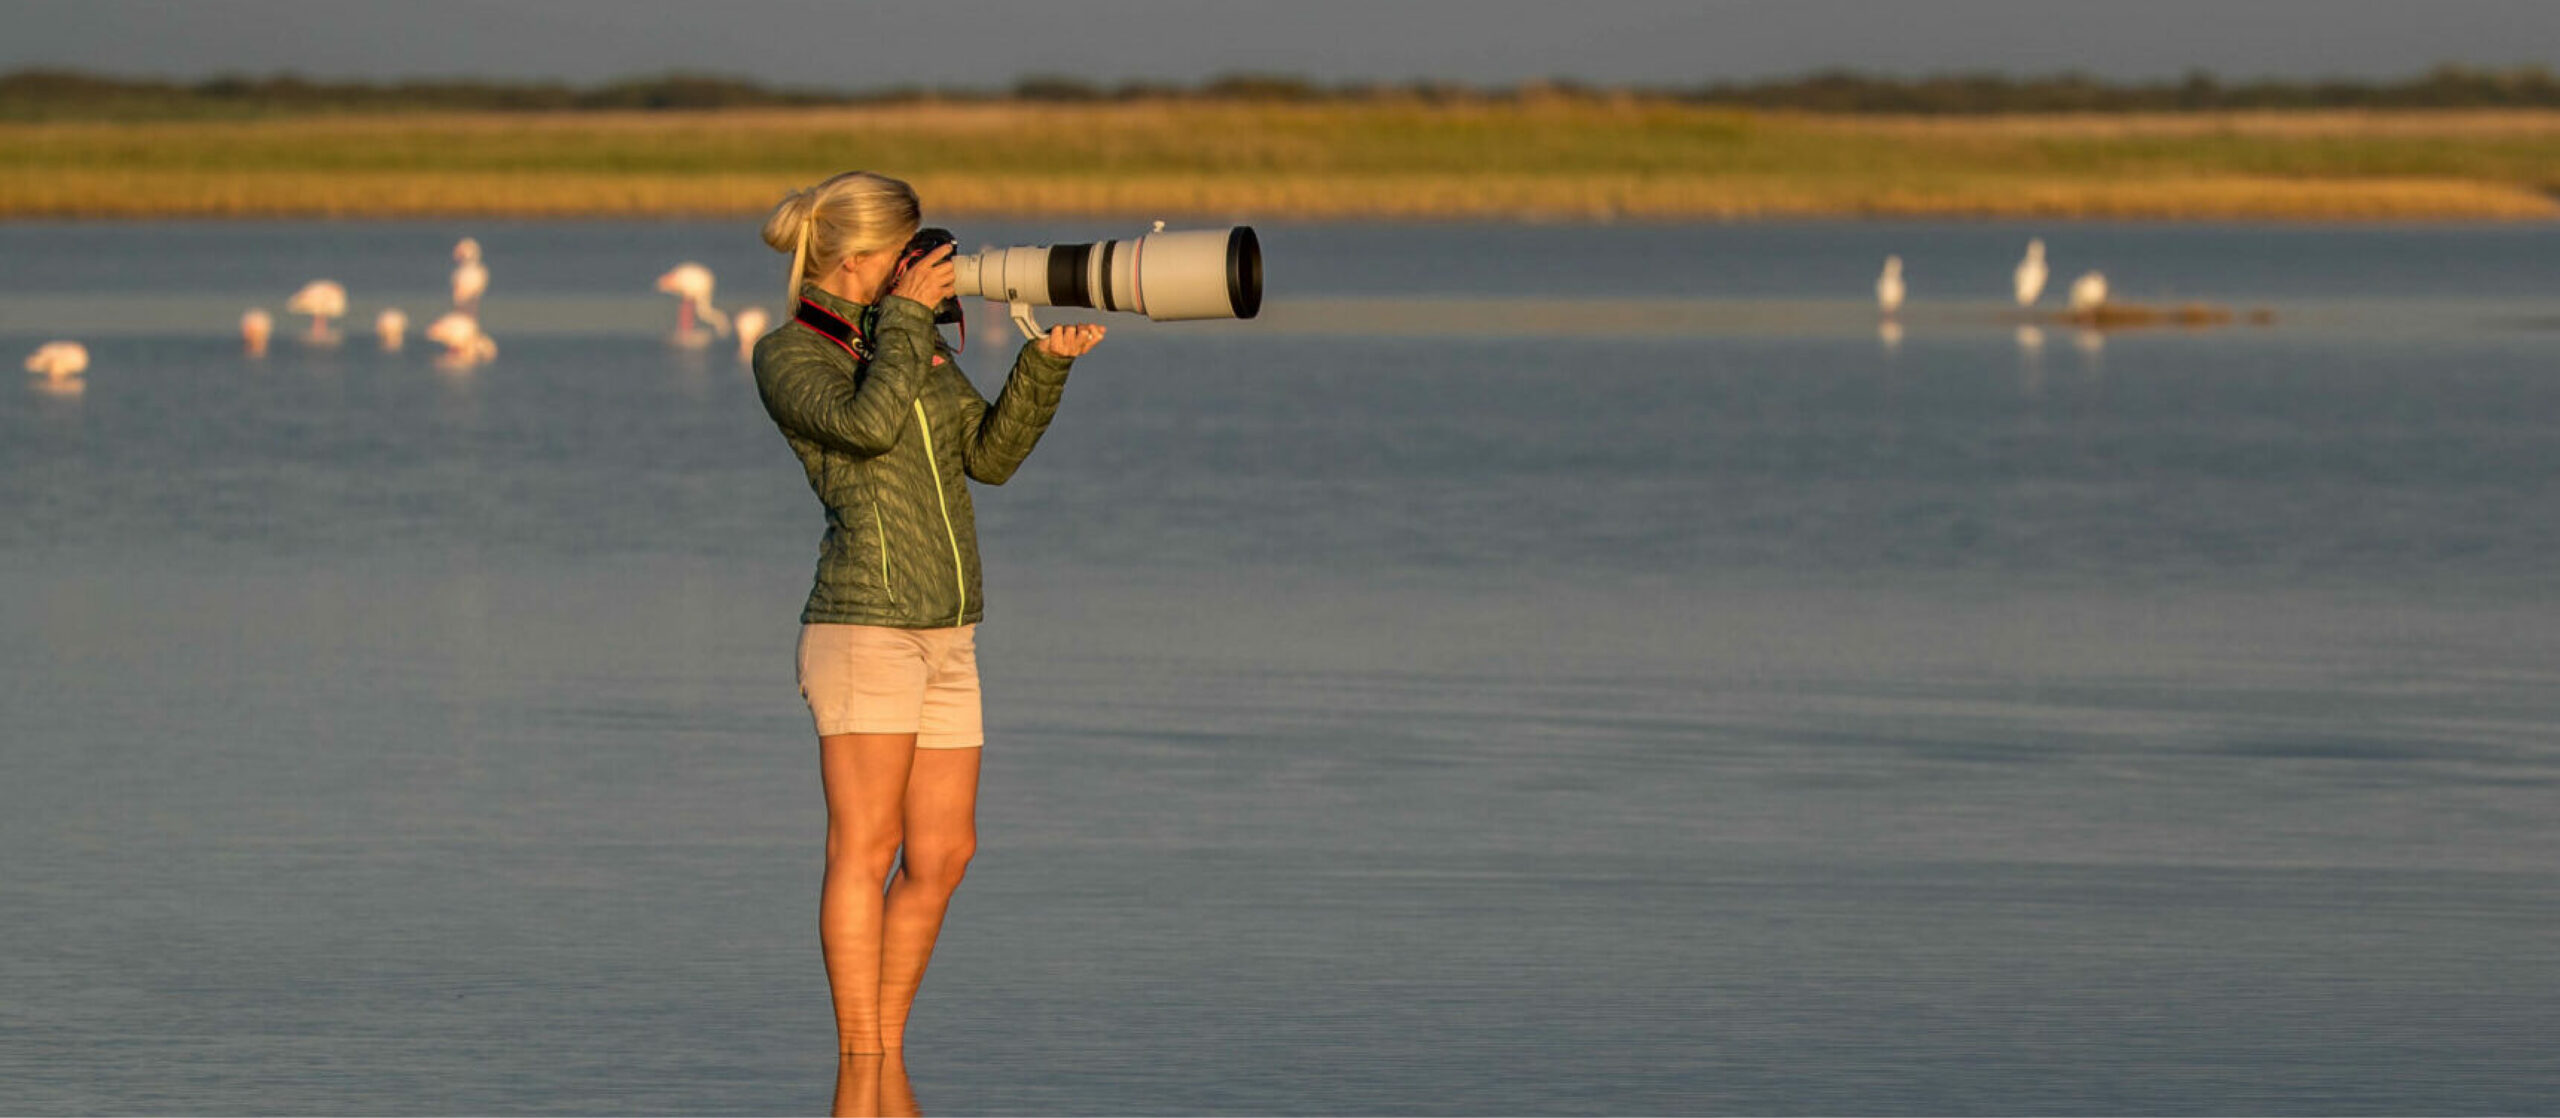 sabine stols pangolin wildlife photographer